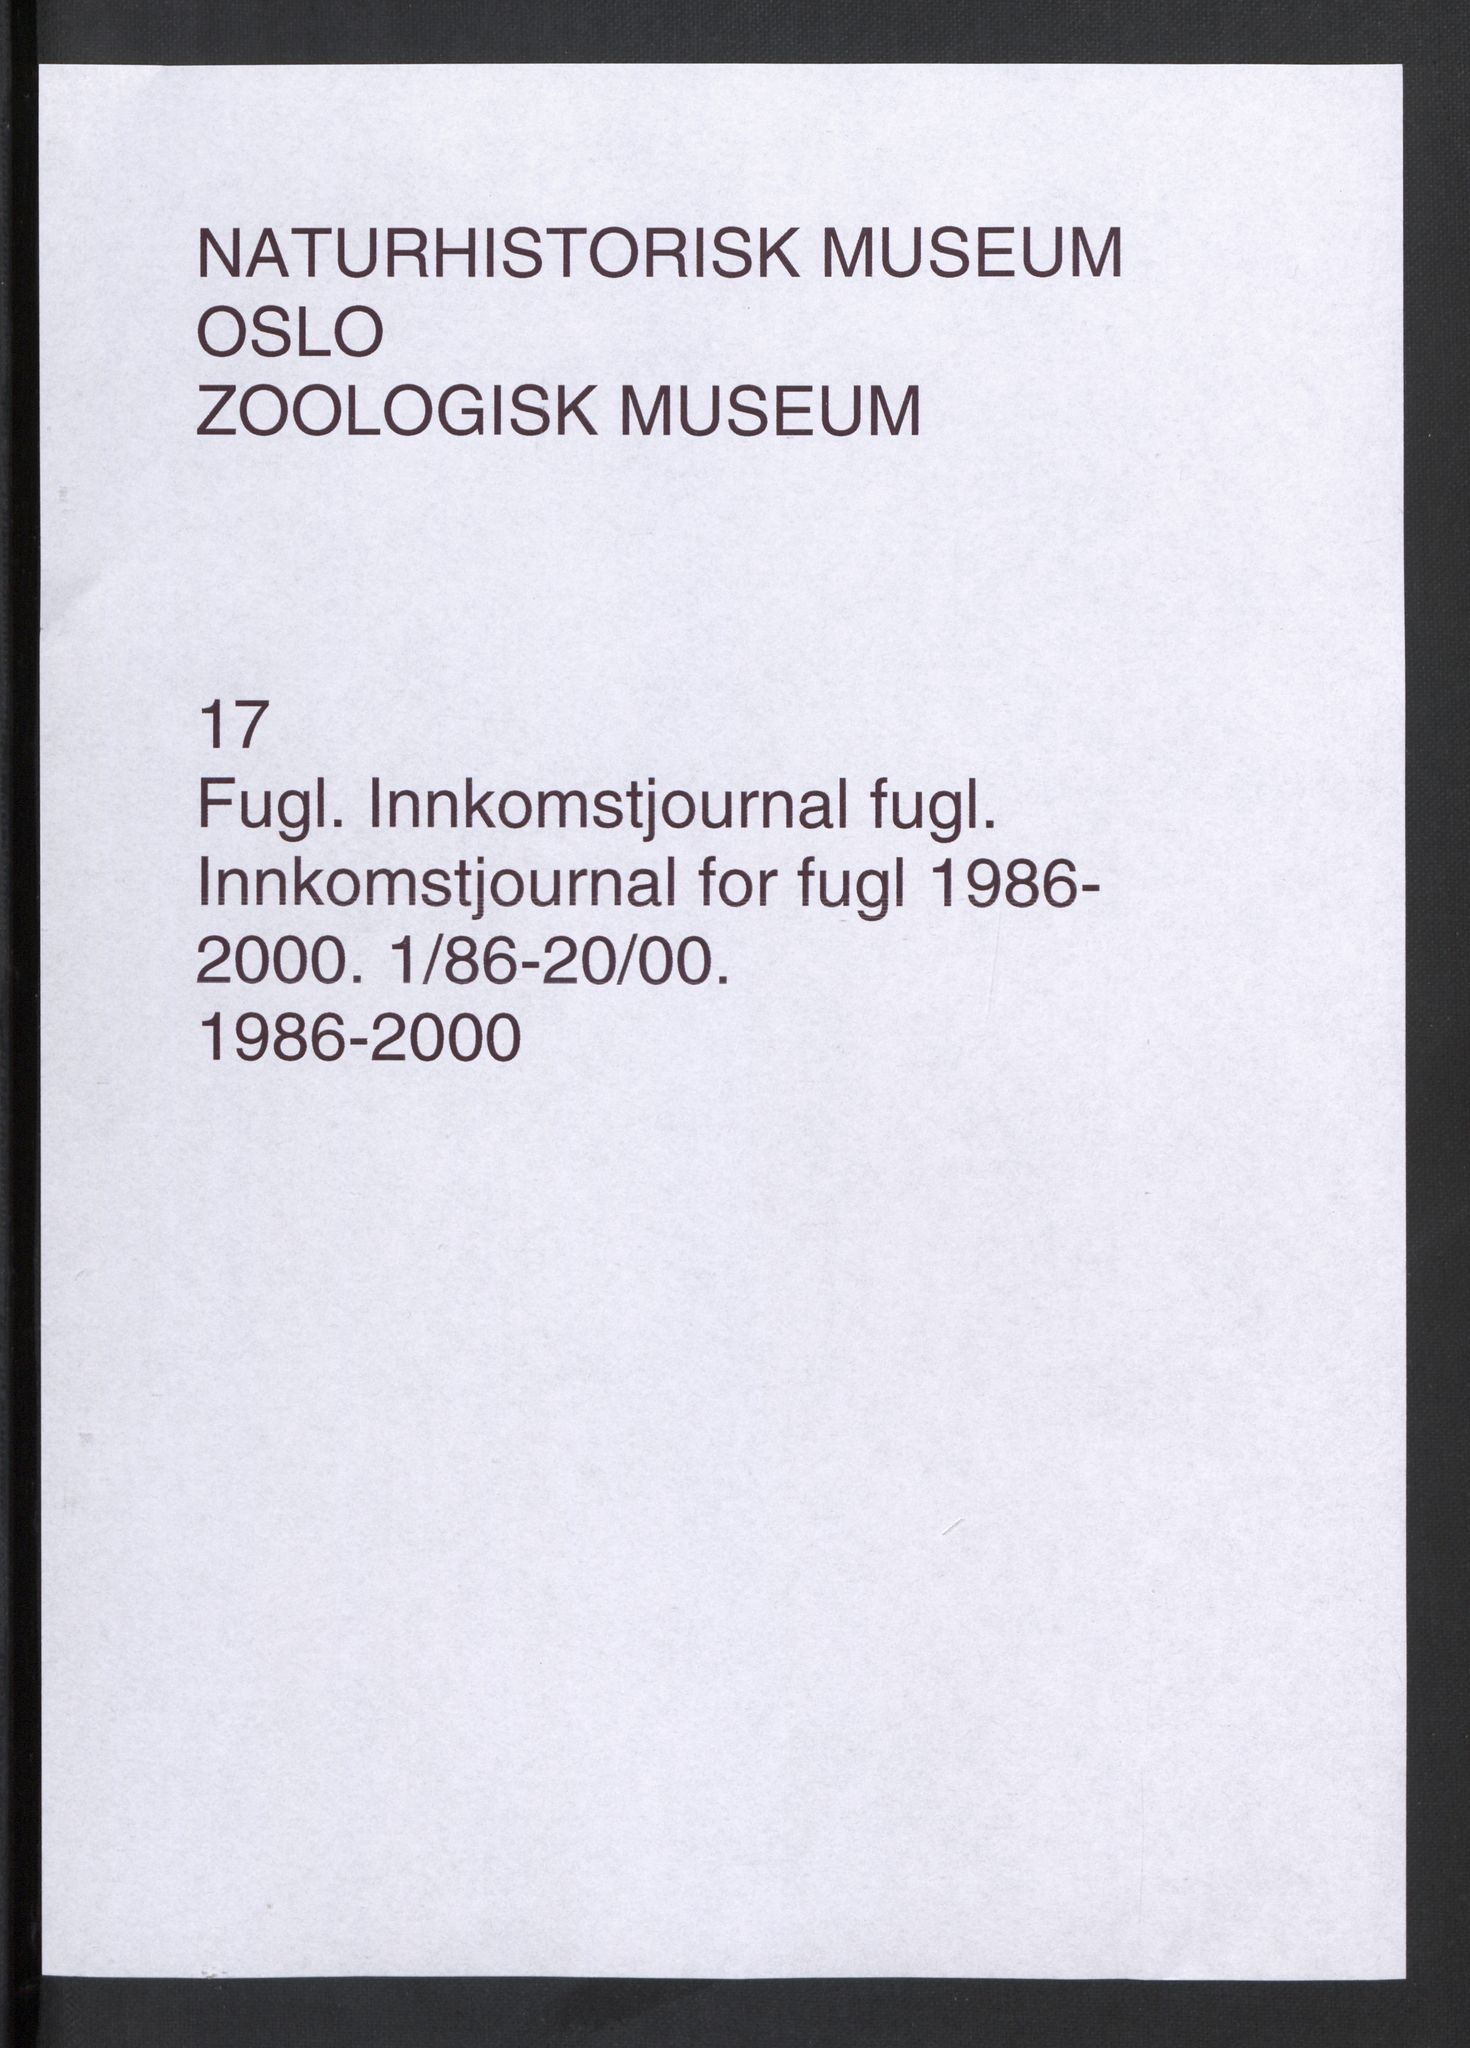 Naturhistorisk museum (Oslo), NHMO/-/2, 1986-2000